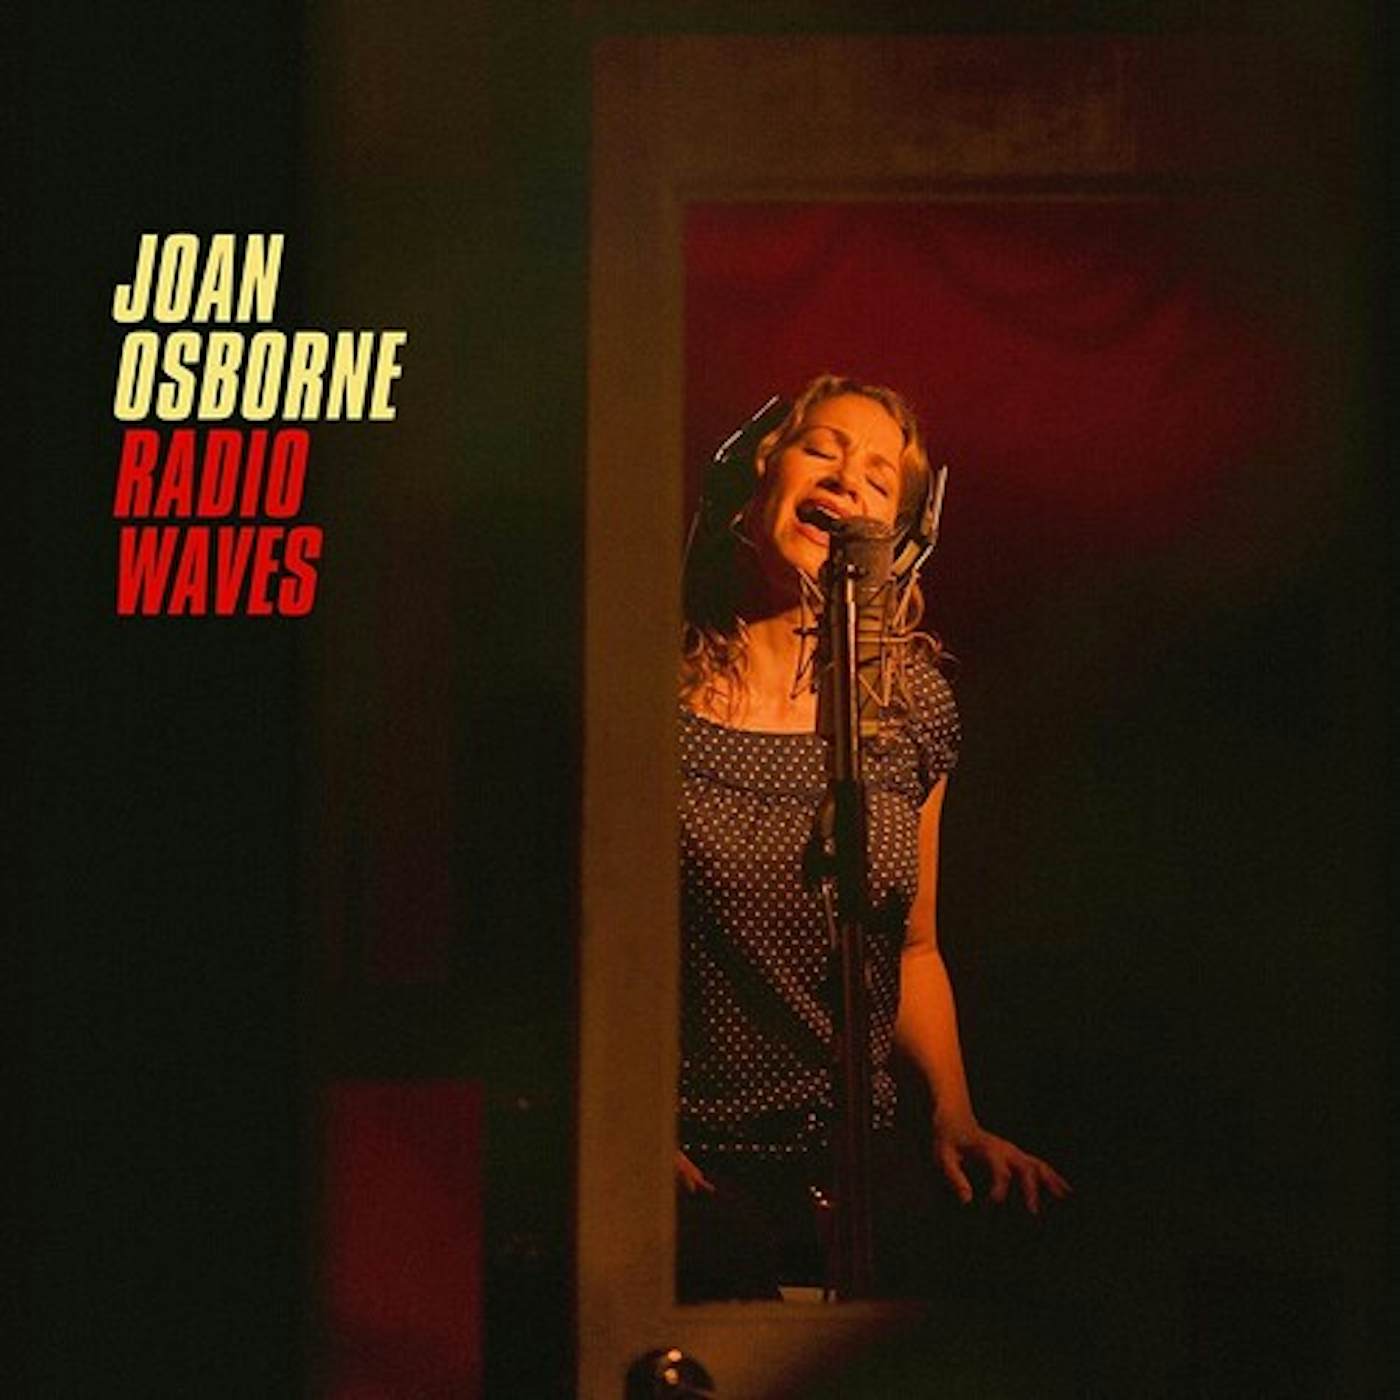 Joan Osborne RADIO WAVES CD